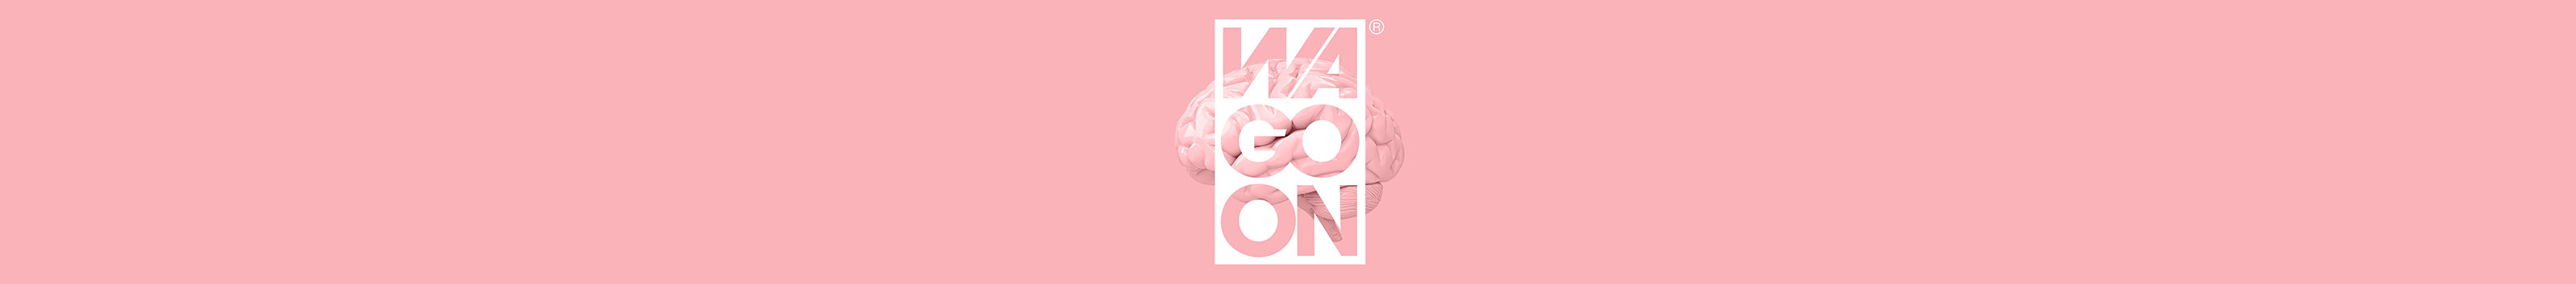 Wagoon Agency's profile banner